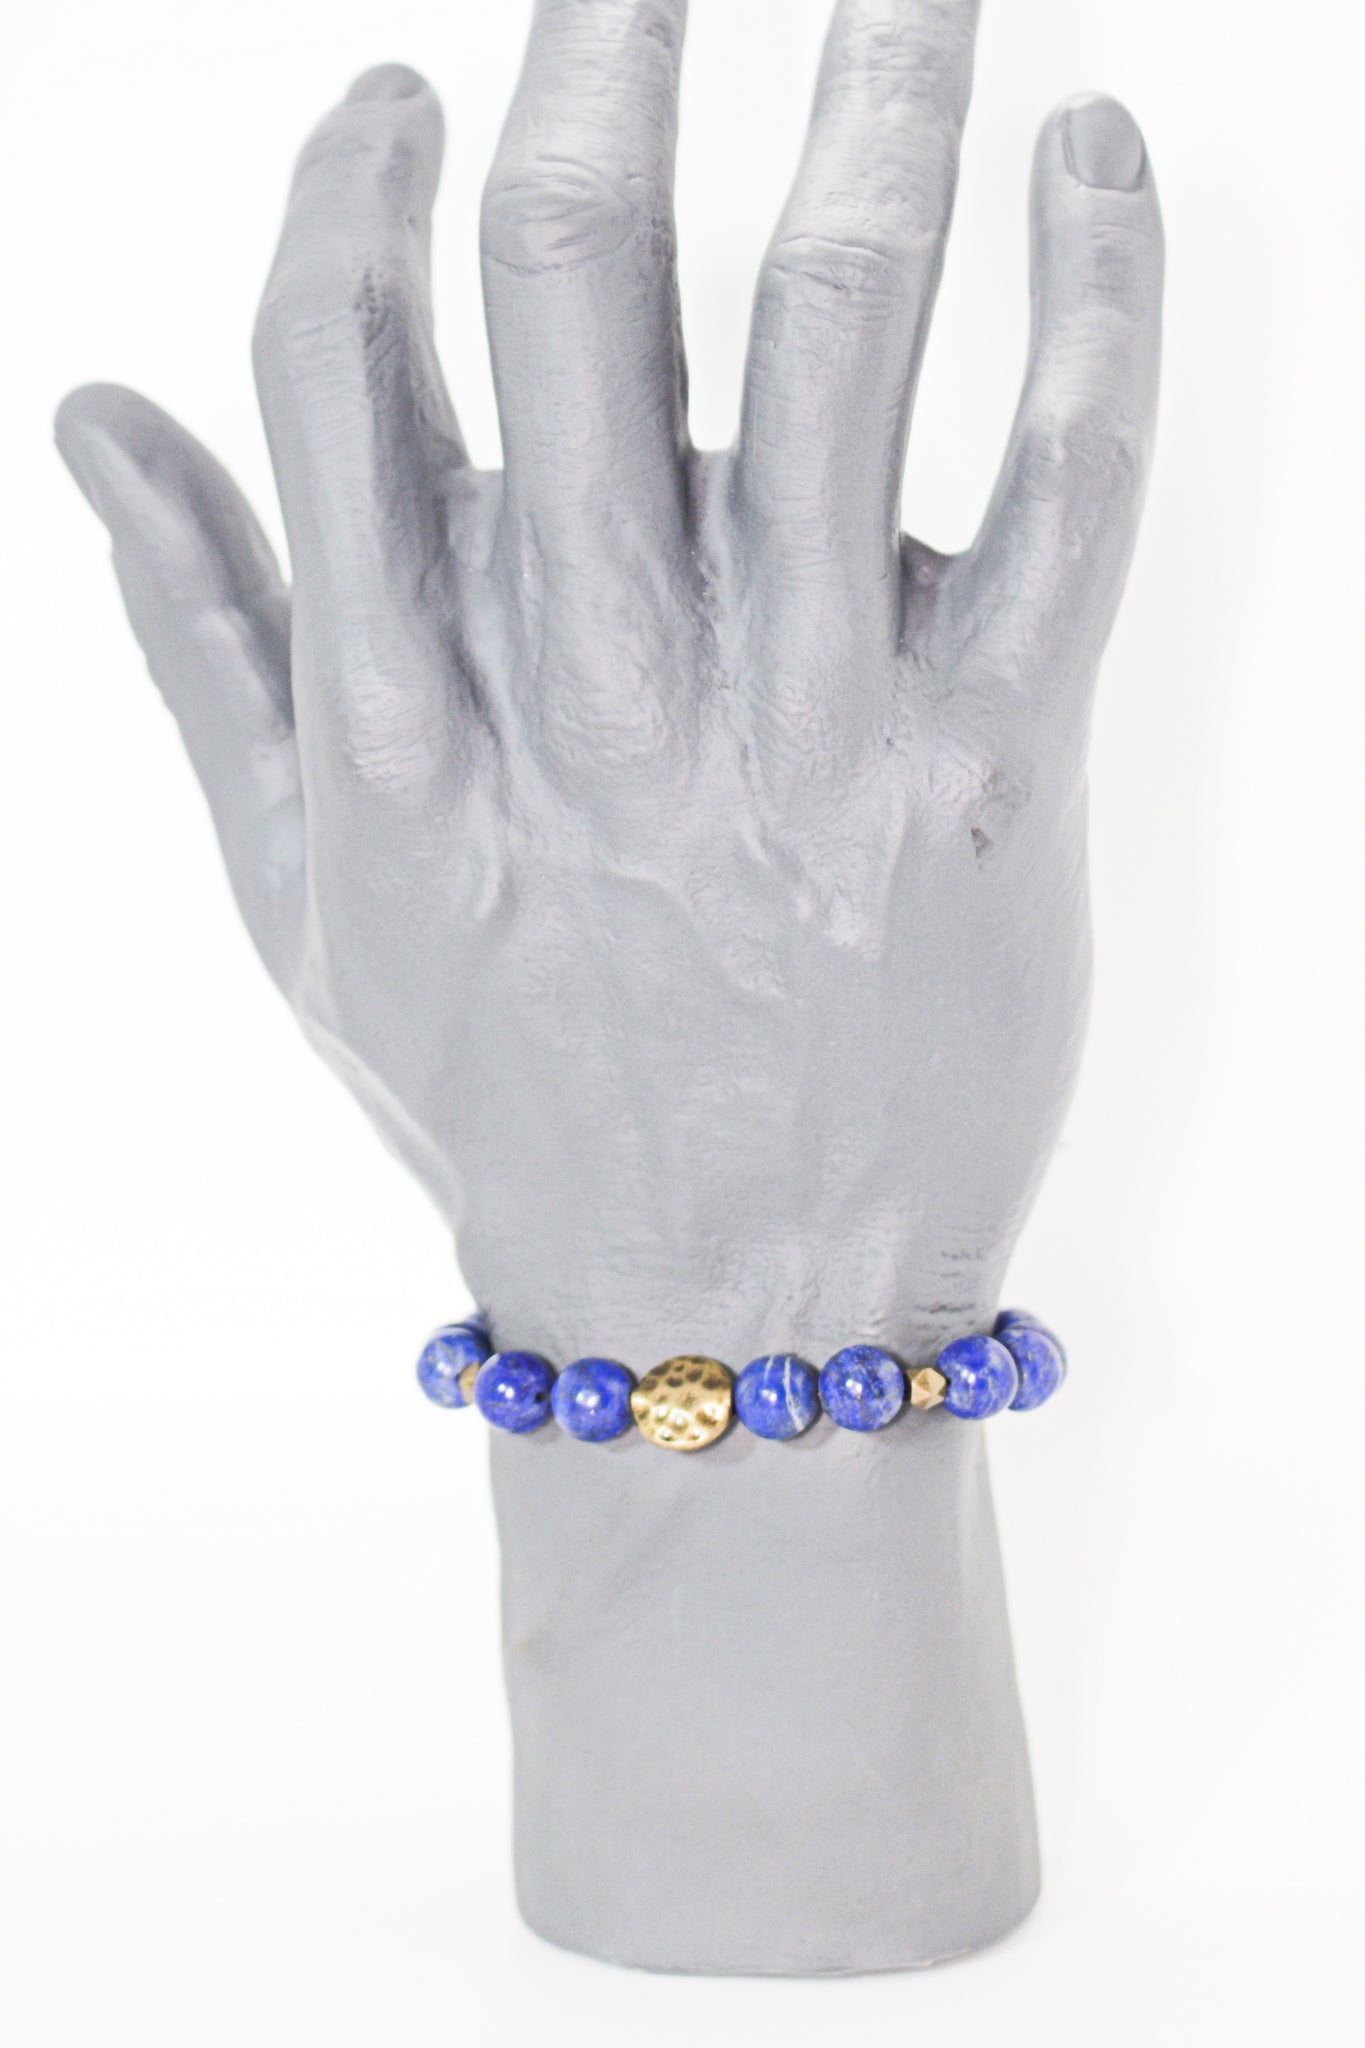 KD-0111 Lapis Lazuli Stretch Bracelet